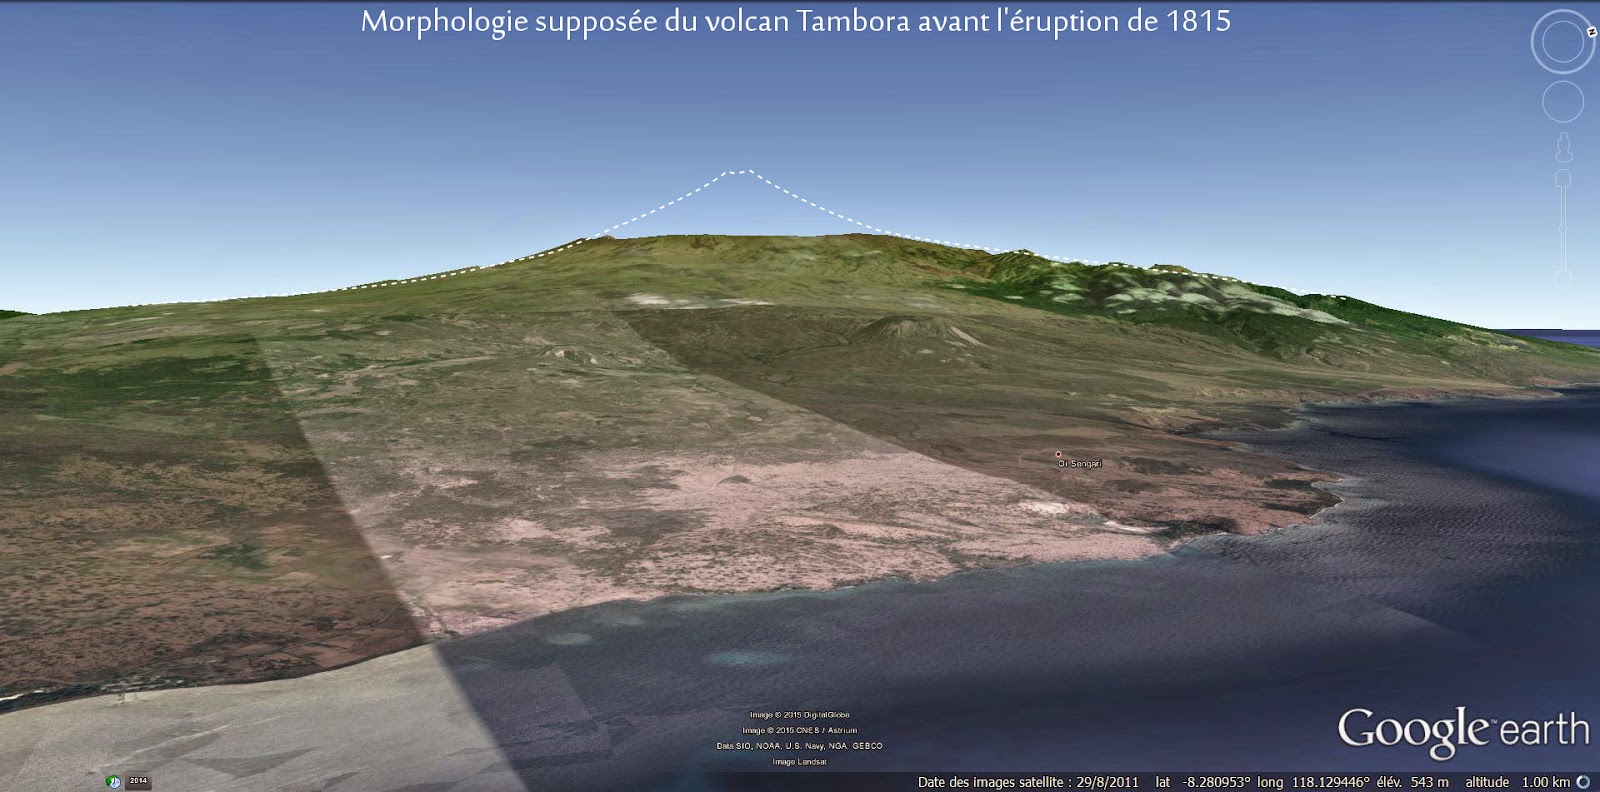 Forme possible du volcan Tambora avant 1815